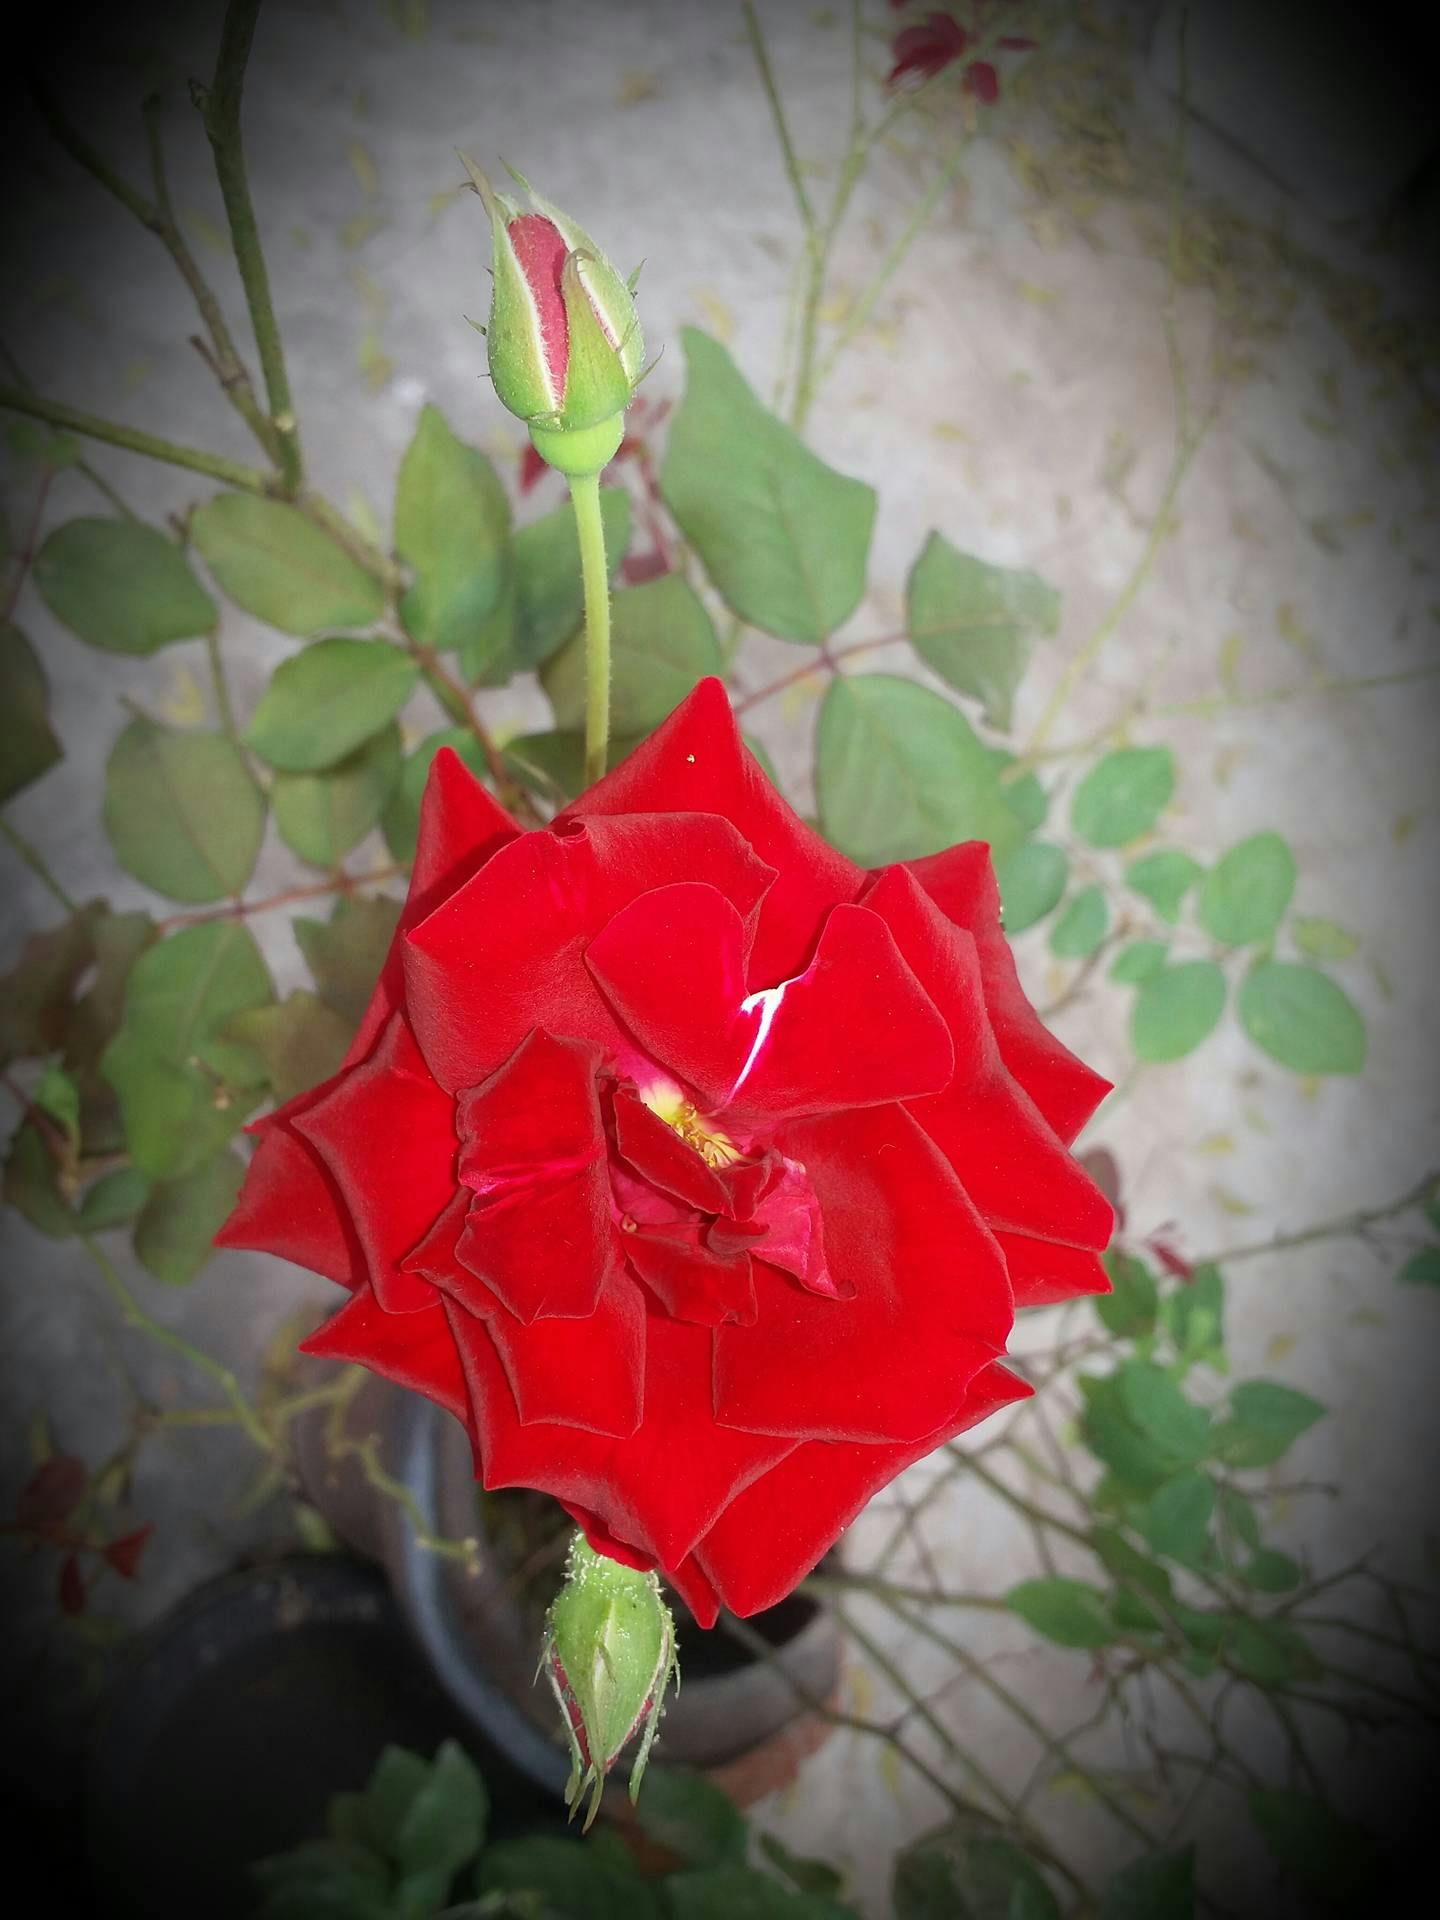 Free stock photo of rose plant